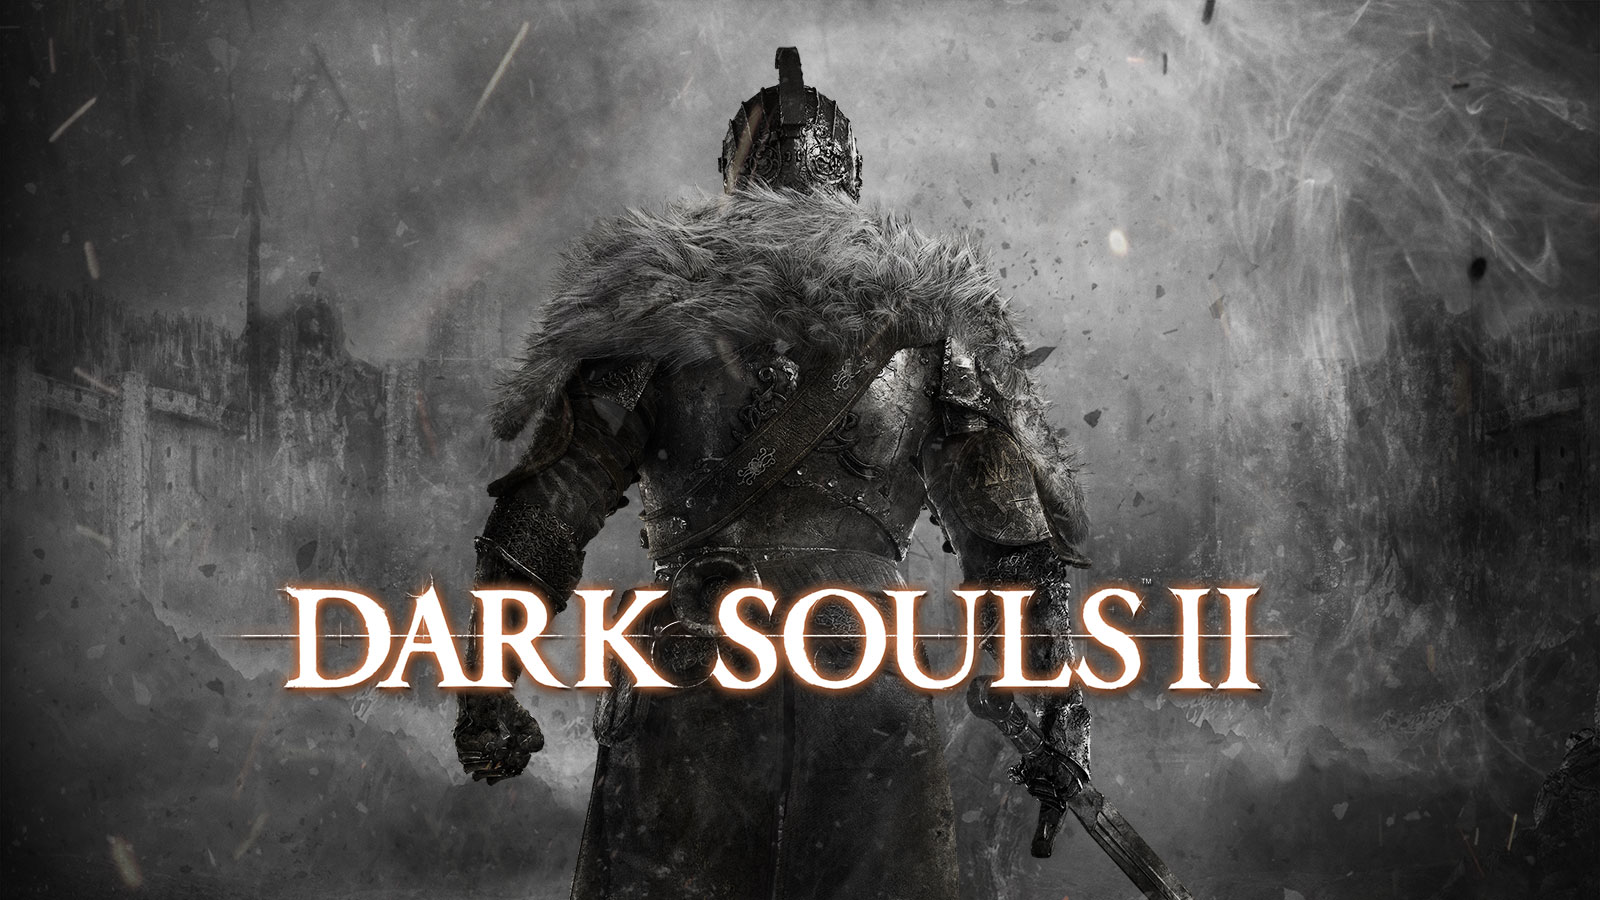 Dark souls ii free download